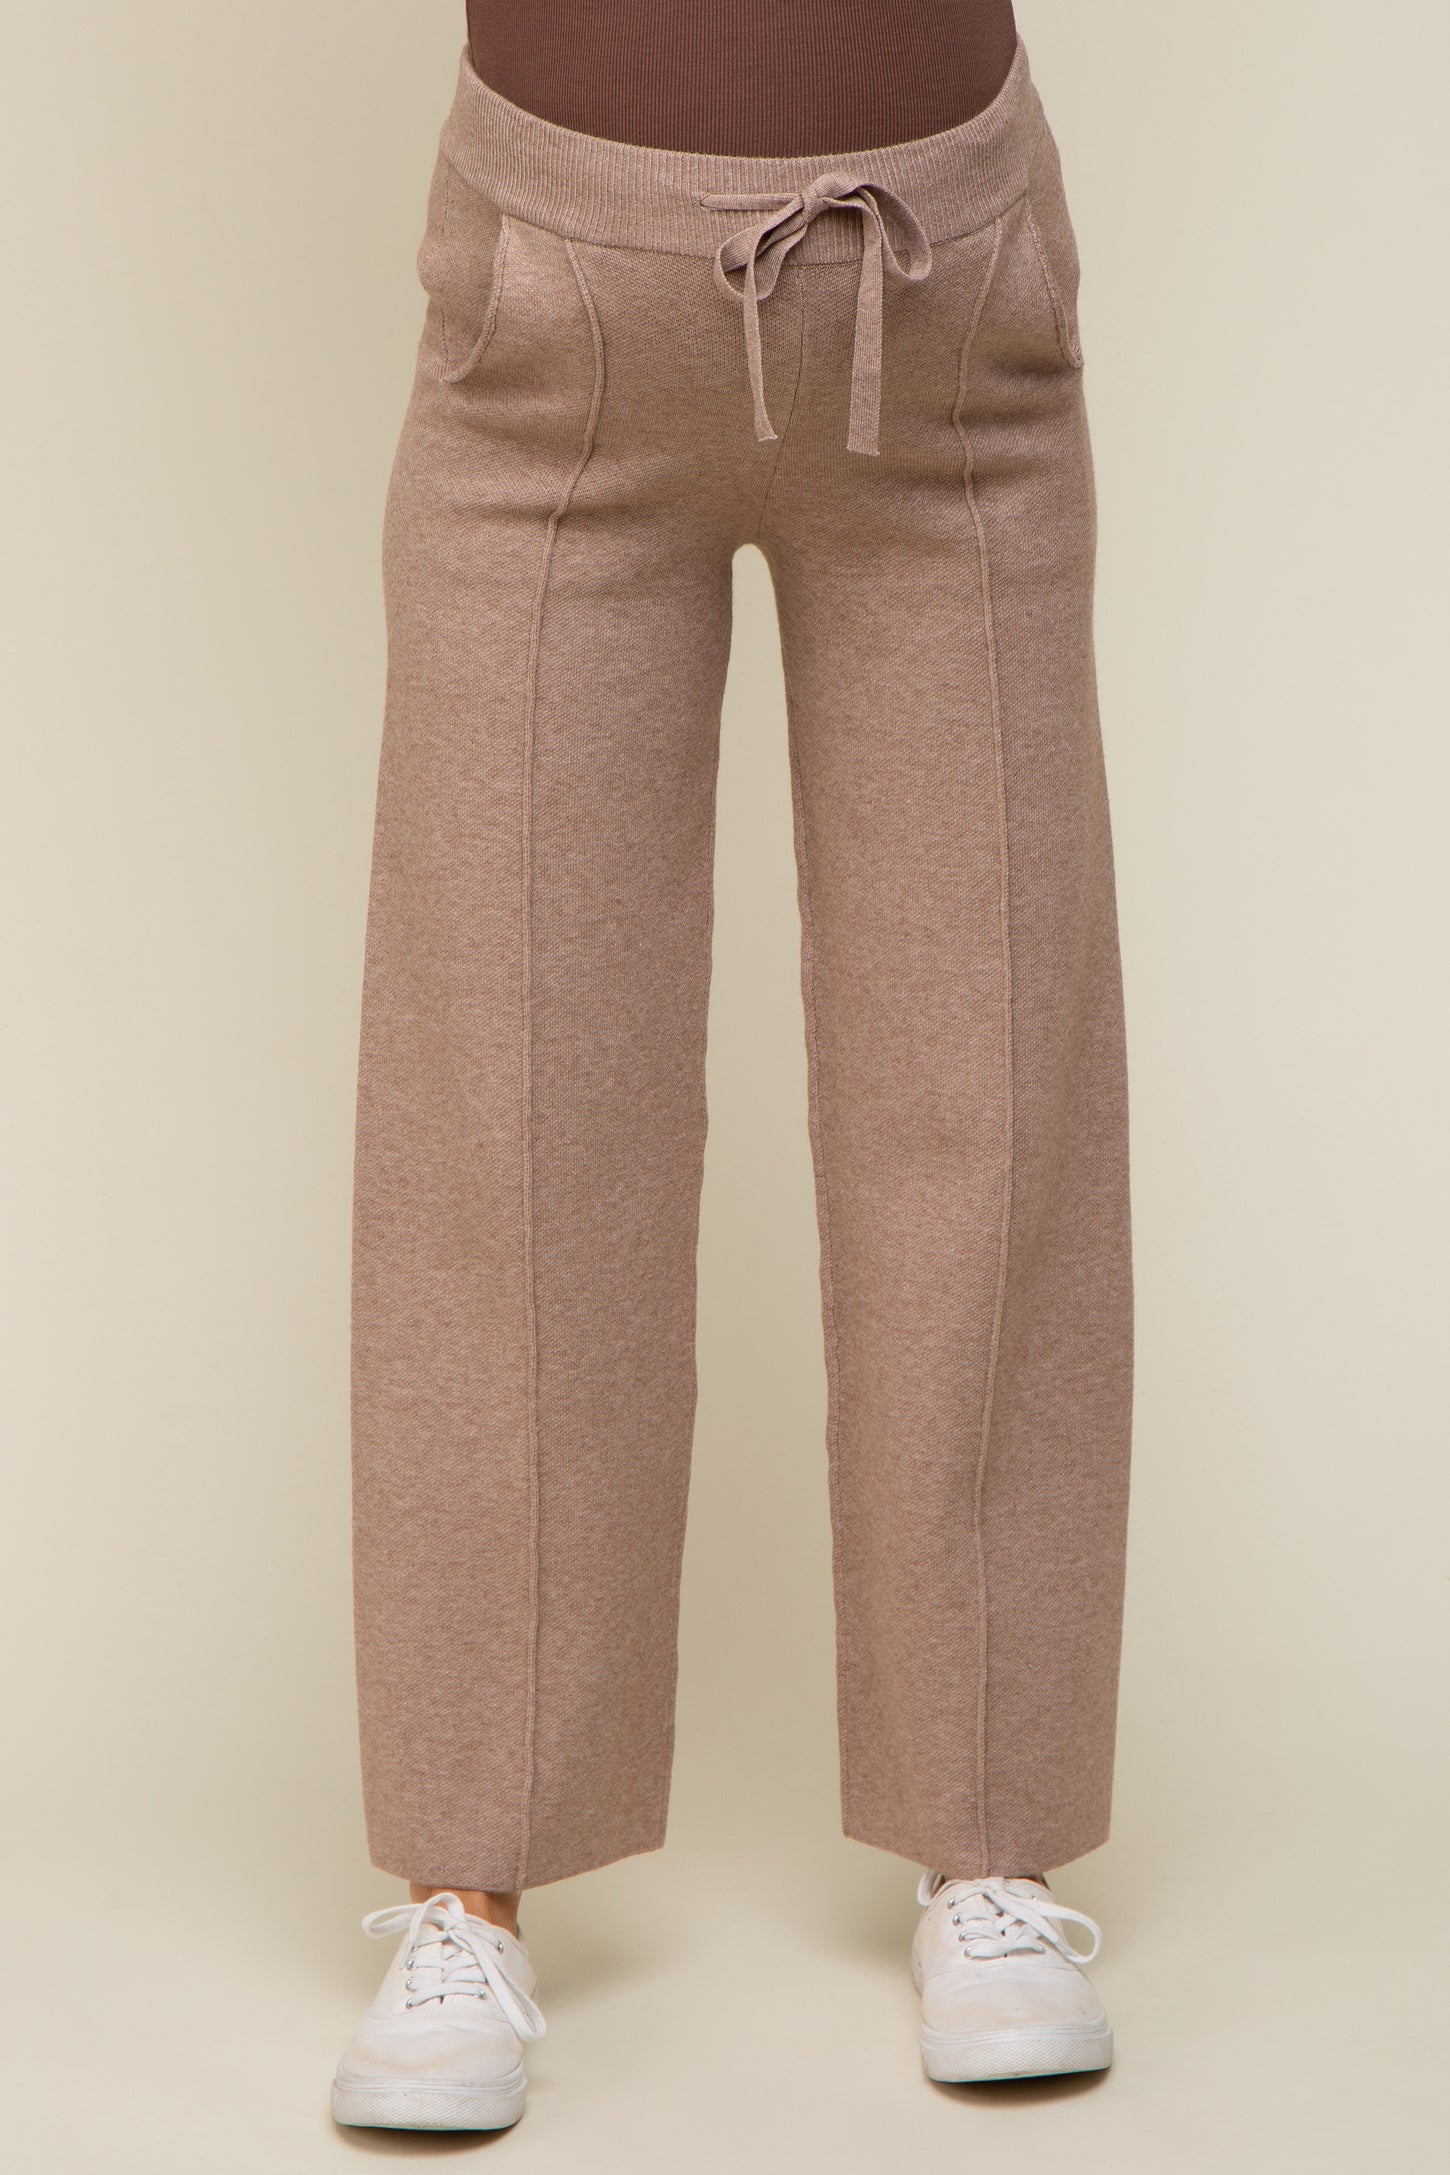 Knit Cashmere Pants - Taupe - Ladies